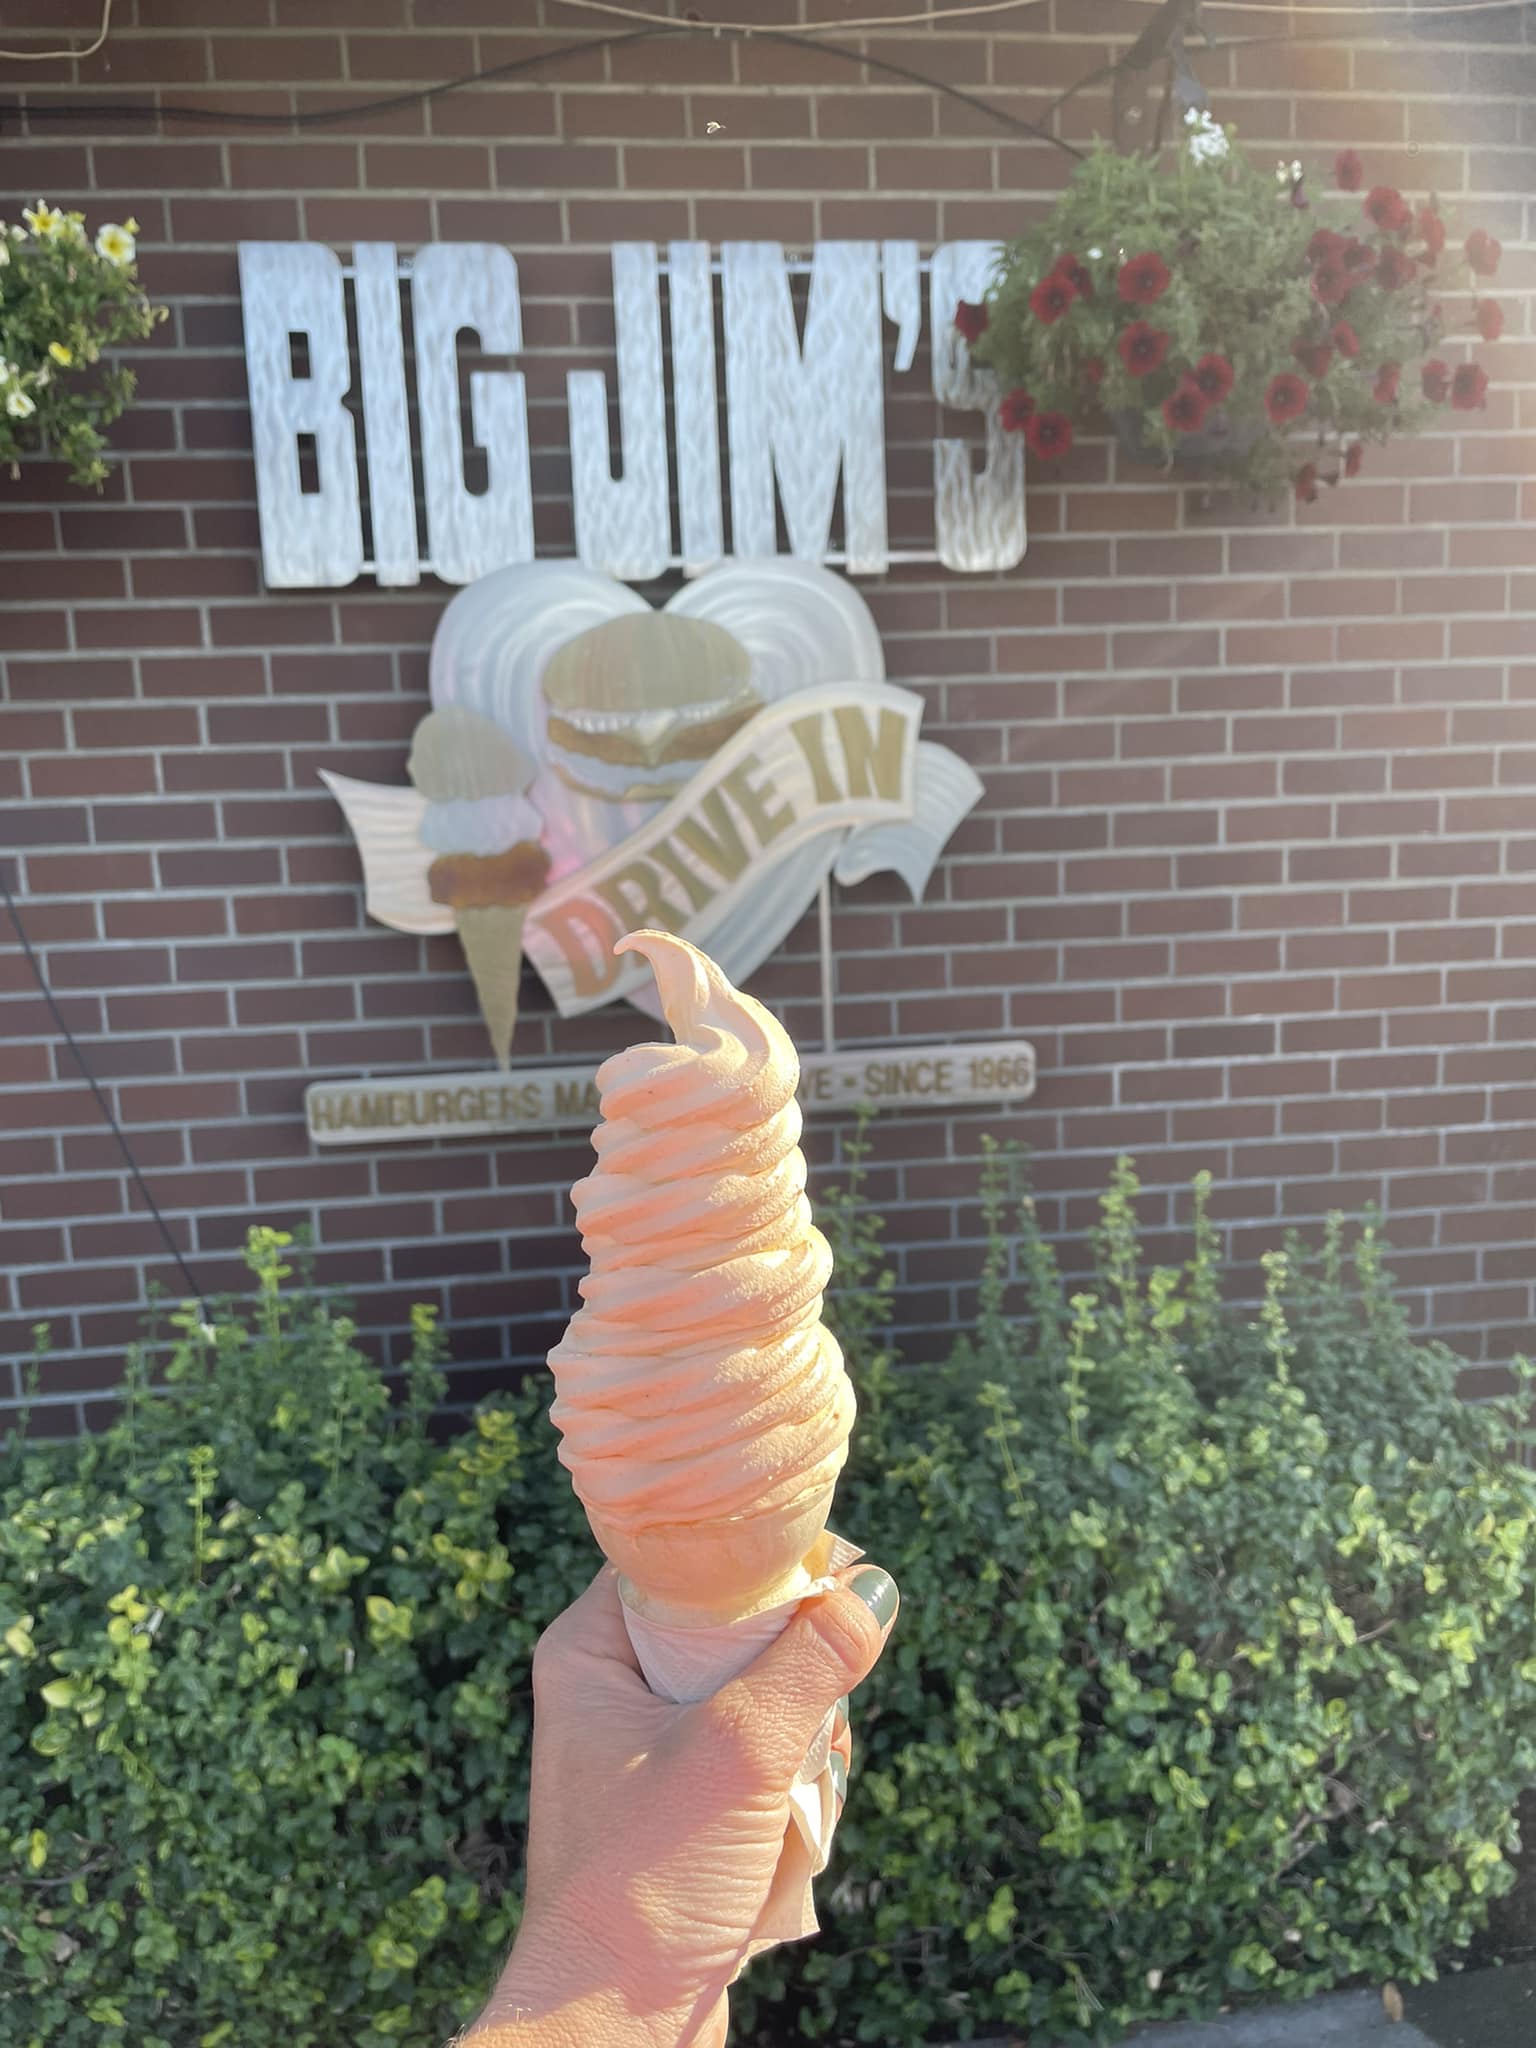 A super tall orange ice cream swirled on top of a cone at Big Jim's